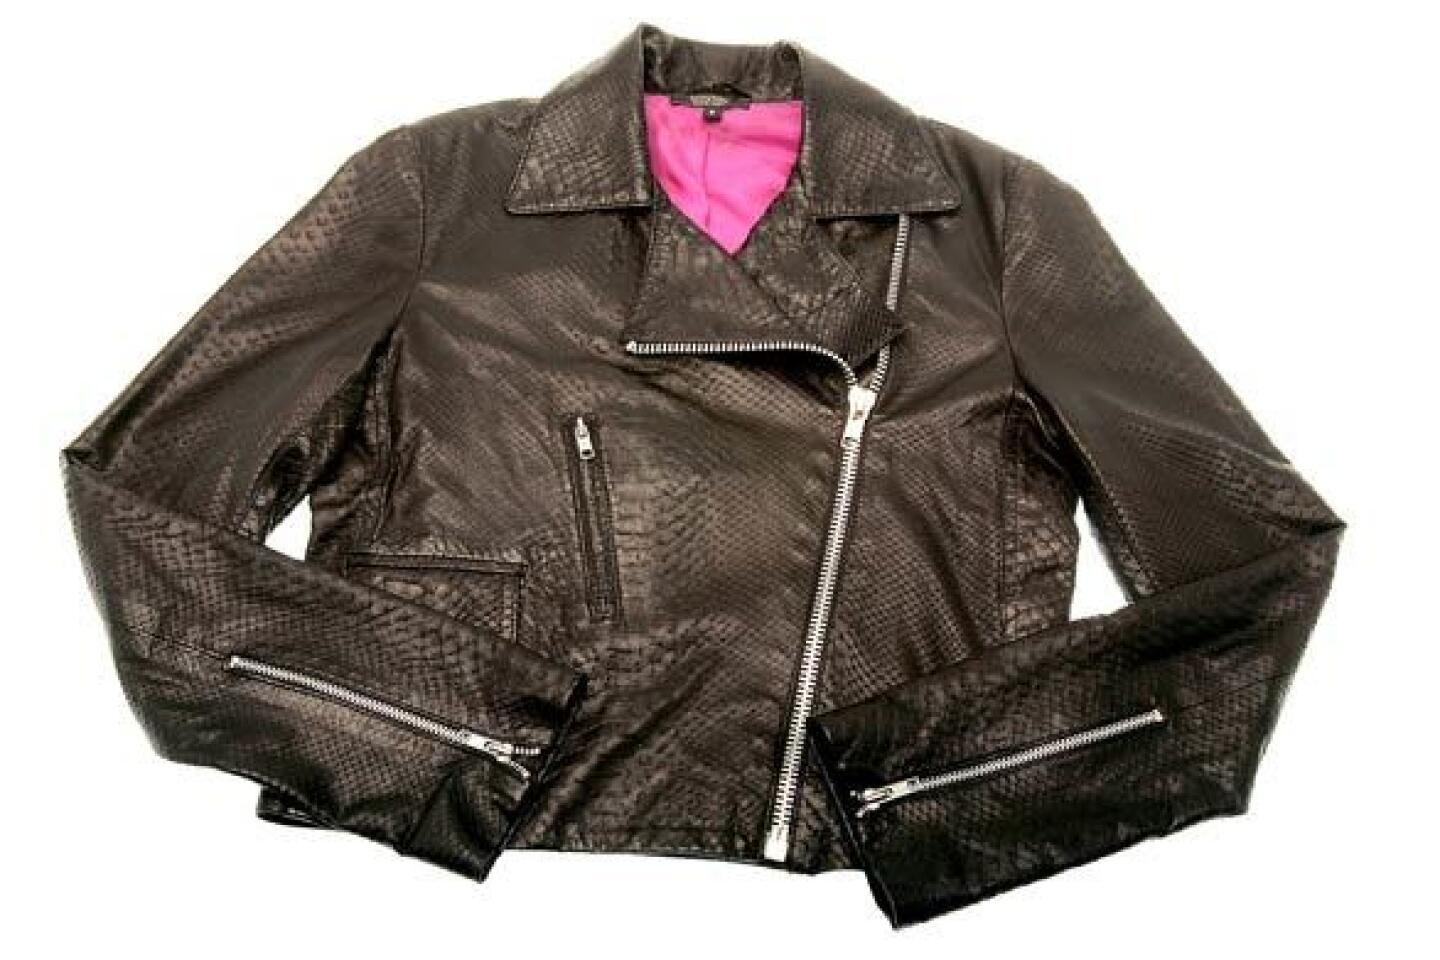 Pink Leather Jacket Women - Brando Leather Jacket - Motorcycle Jacket Women  at  Women's Coats Shop